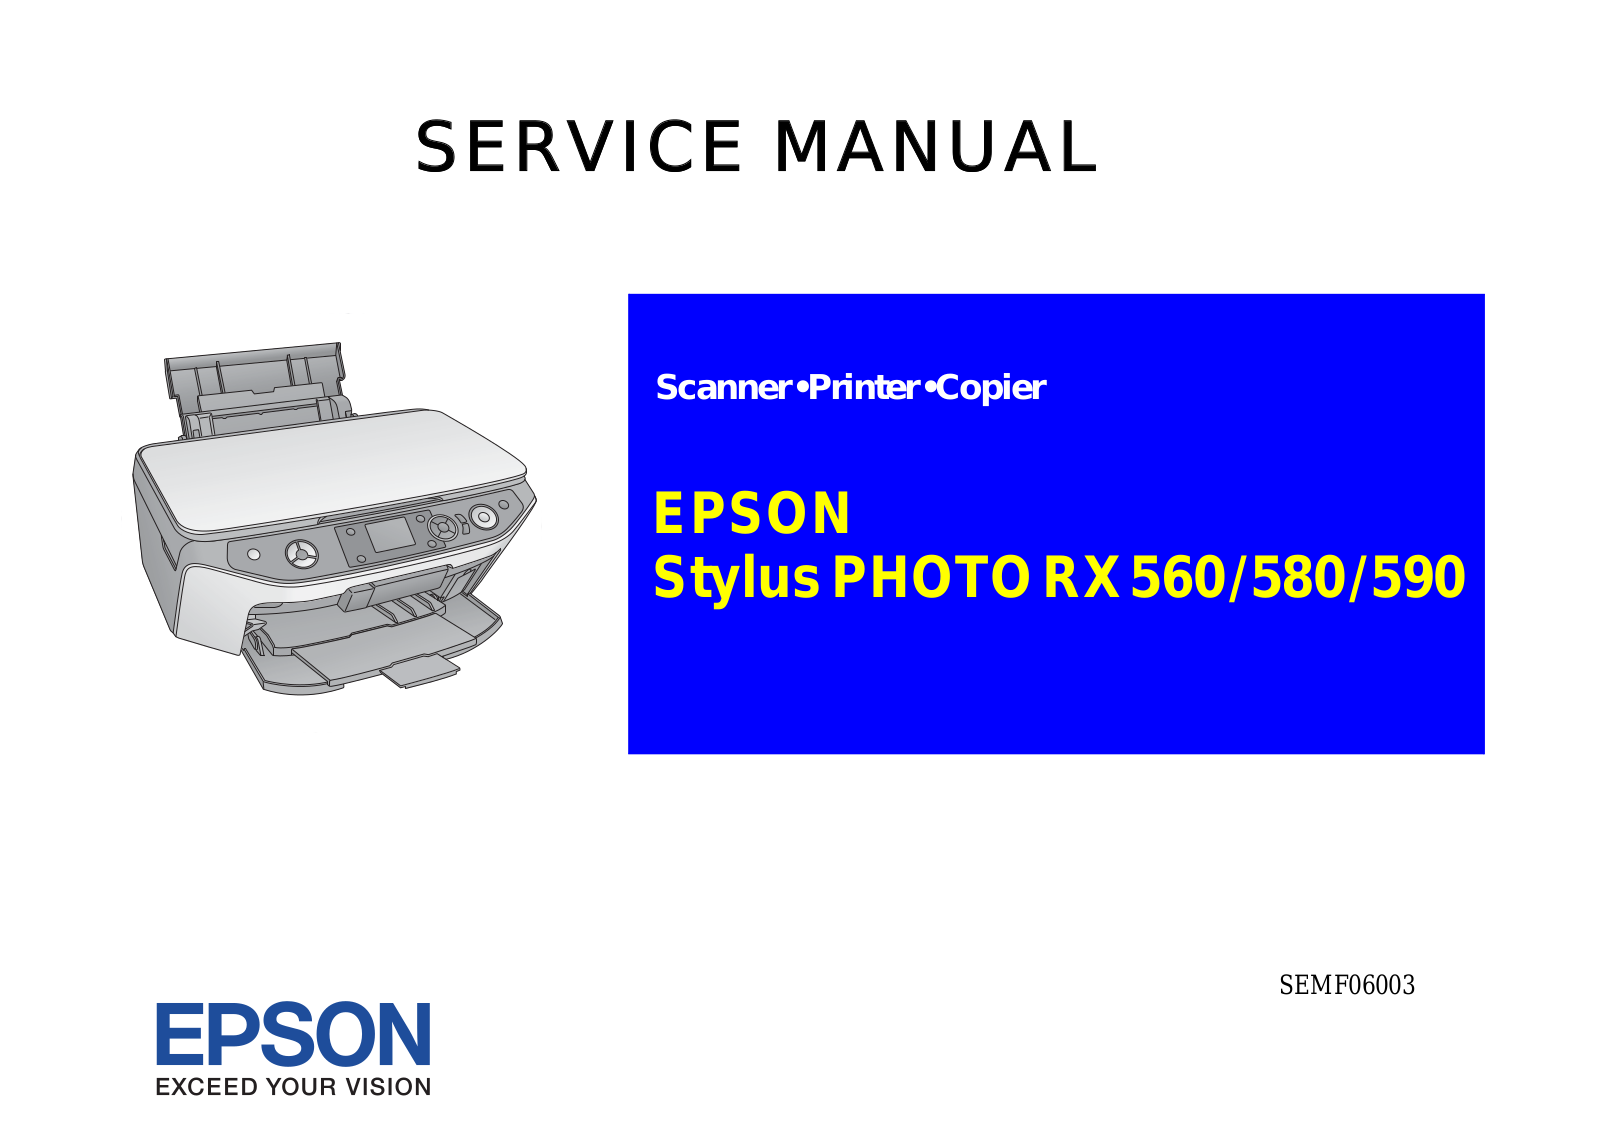 Epson Stylus Photo RX560, Stylus Photo RX580, Stylus Photo RX590 Service Manual